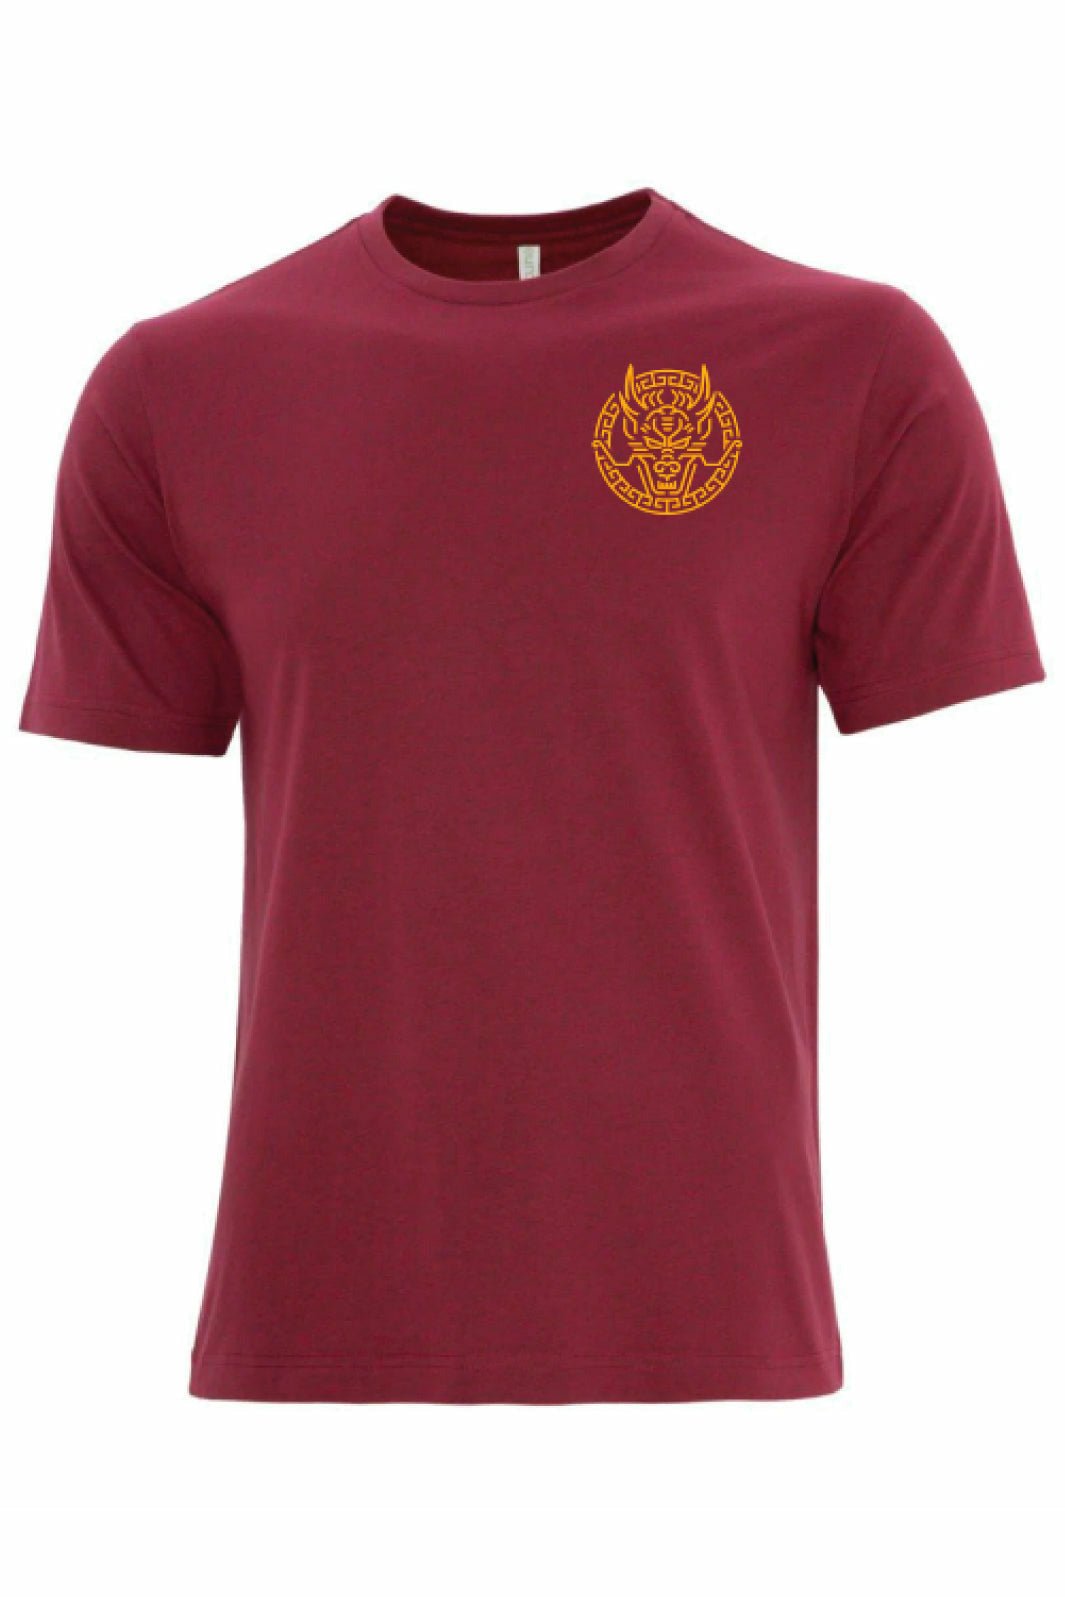 TNPC SLP Premier T-shirt (Front Logo Only) - Oddball Workshop